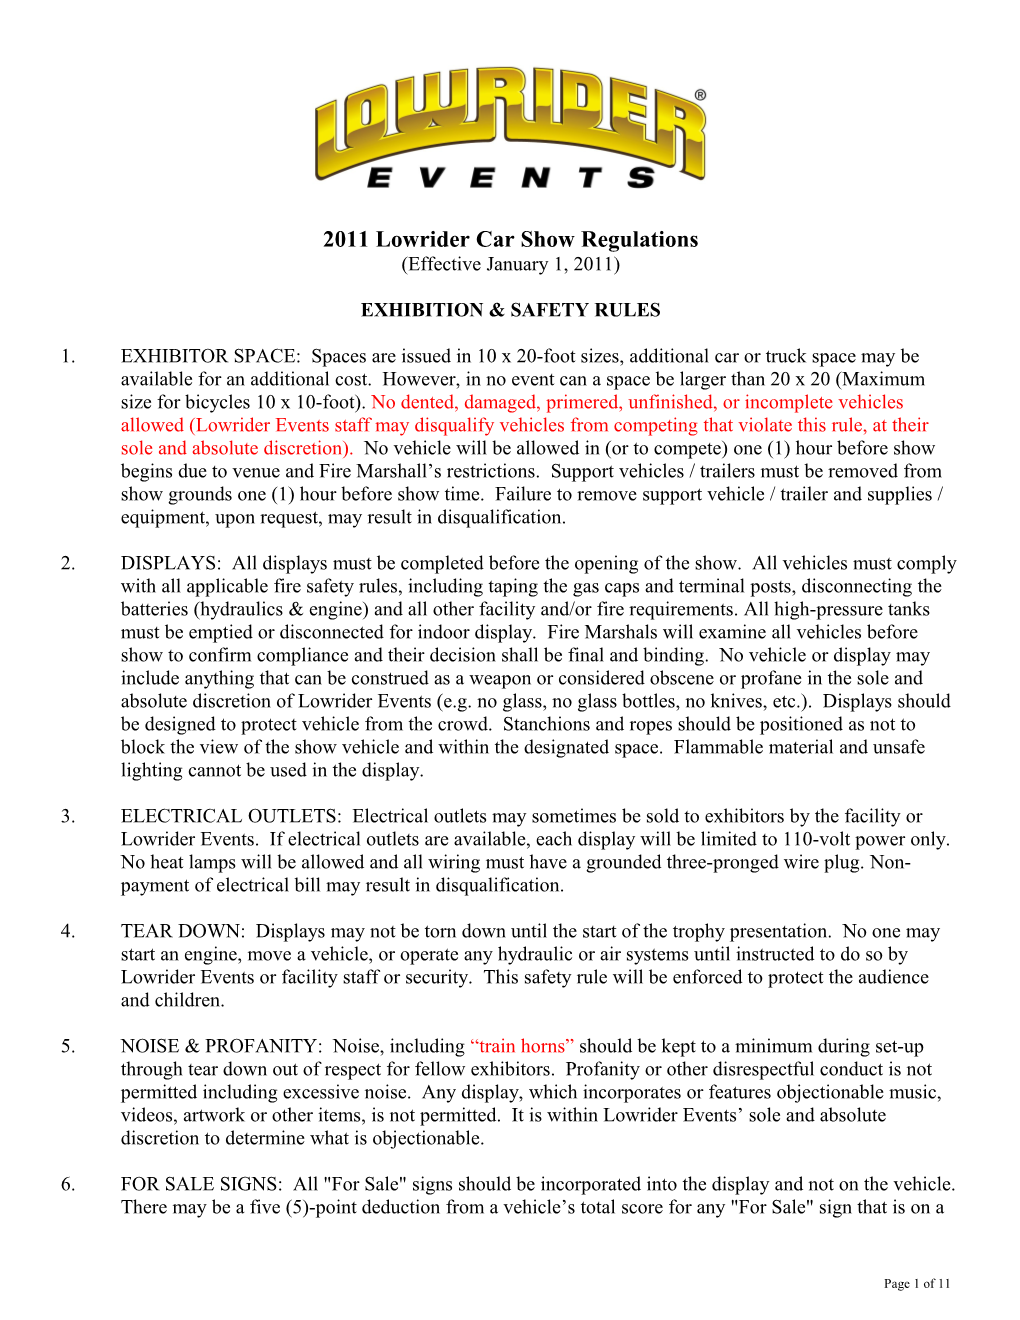 2004 Lowrider Car Show Regulations